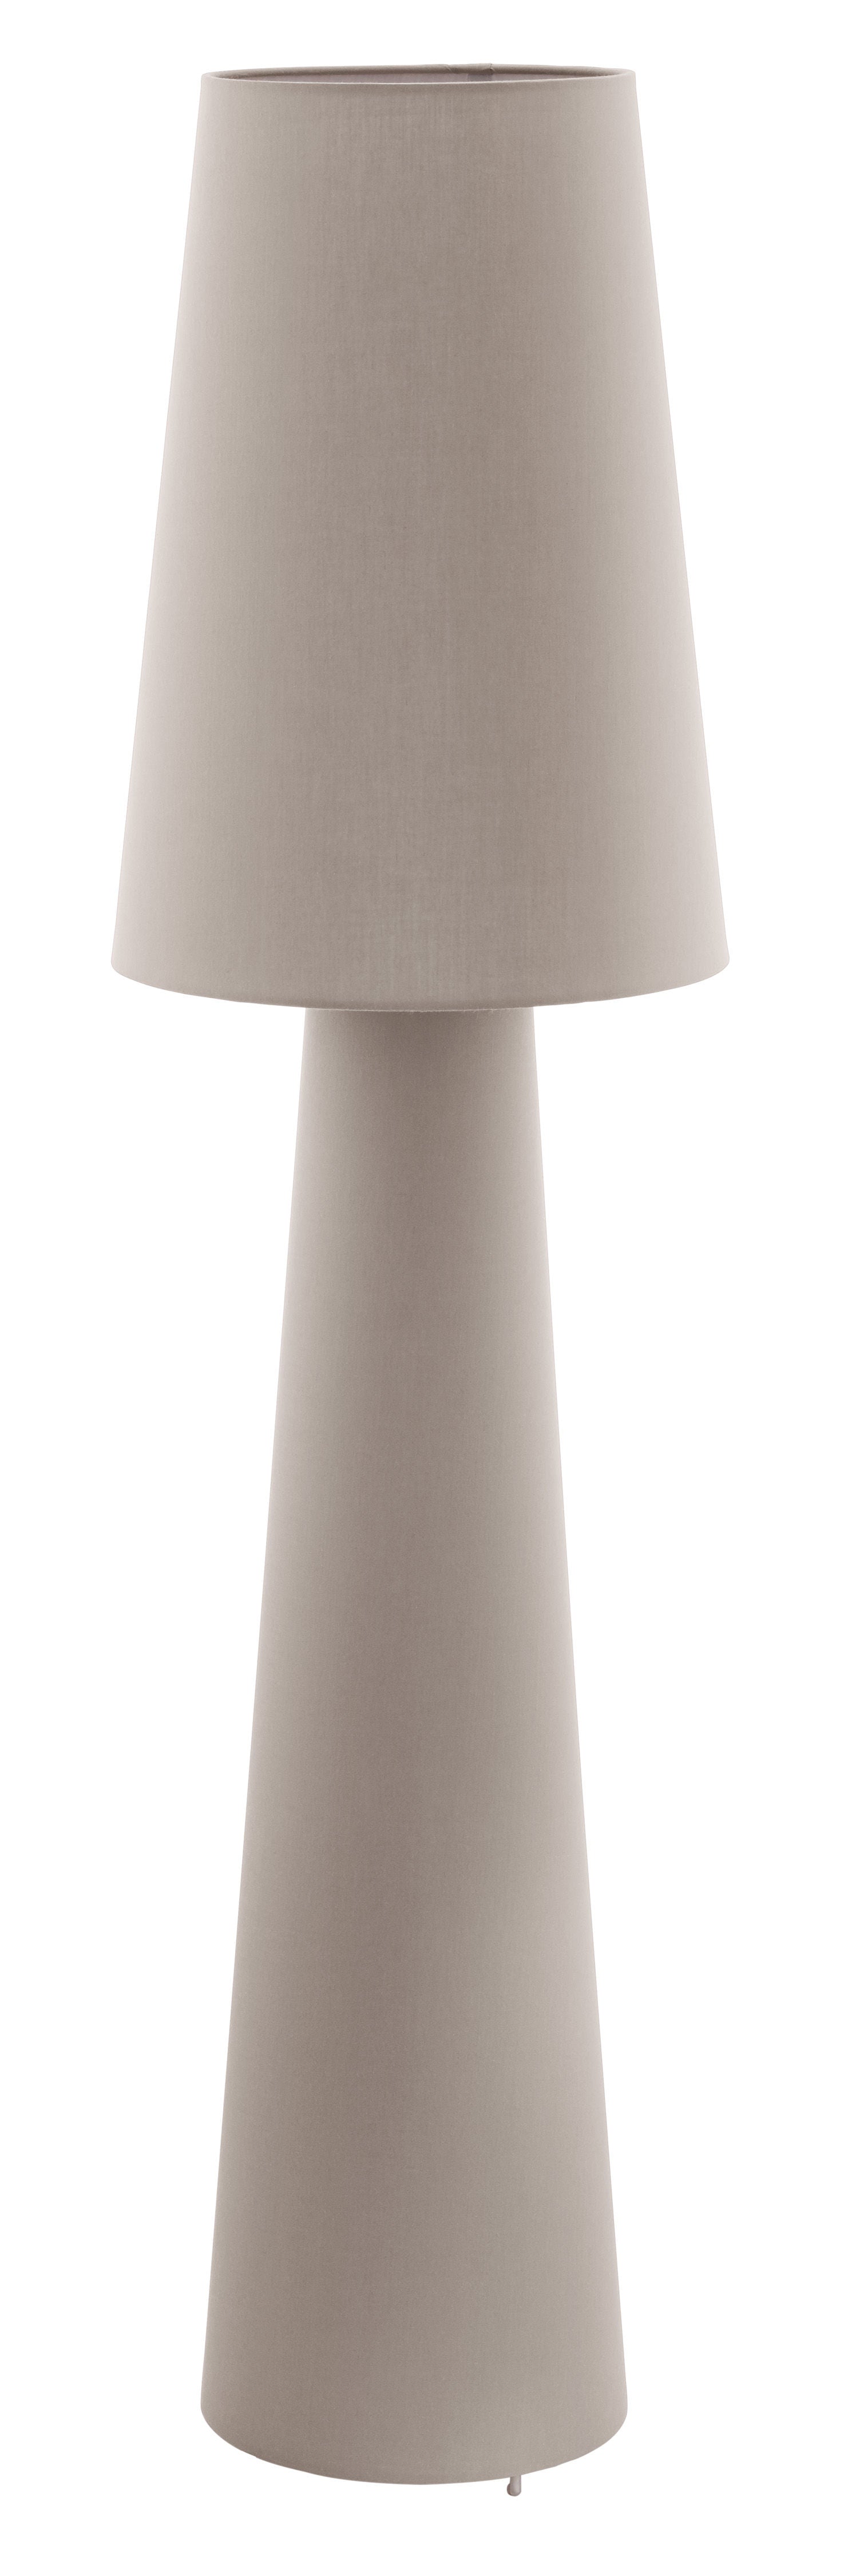 Carpara Floor lamp Brown - 97141A | EGLO